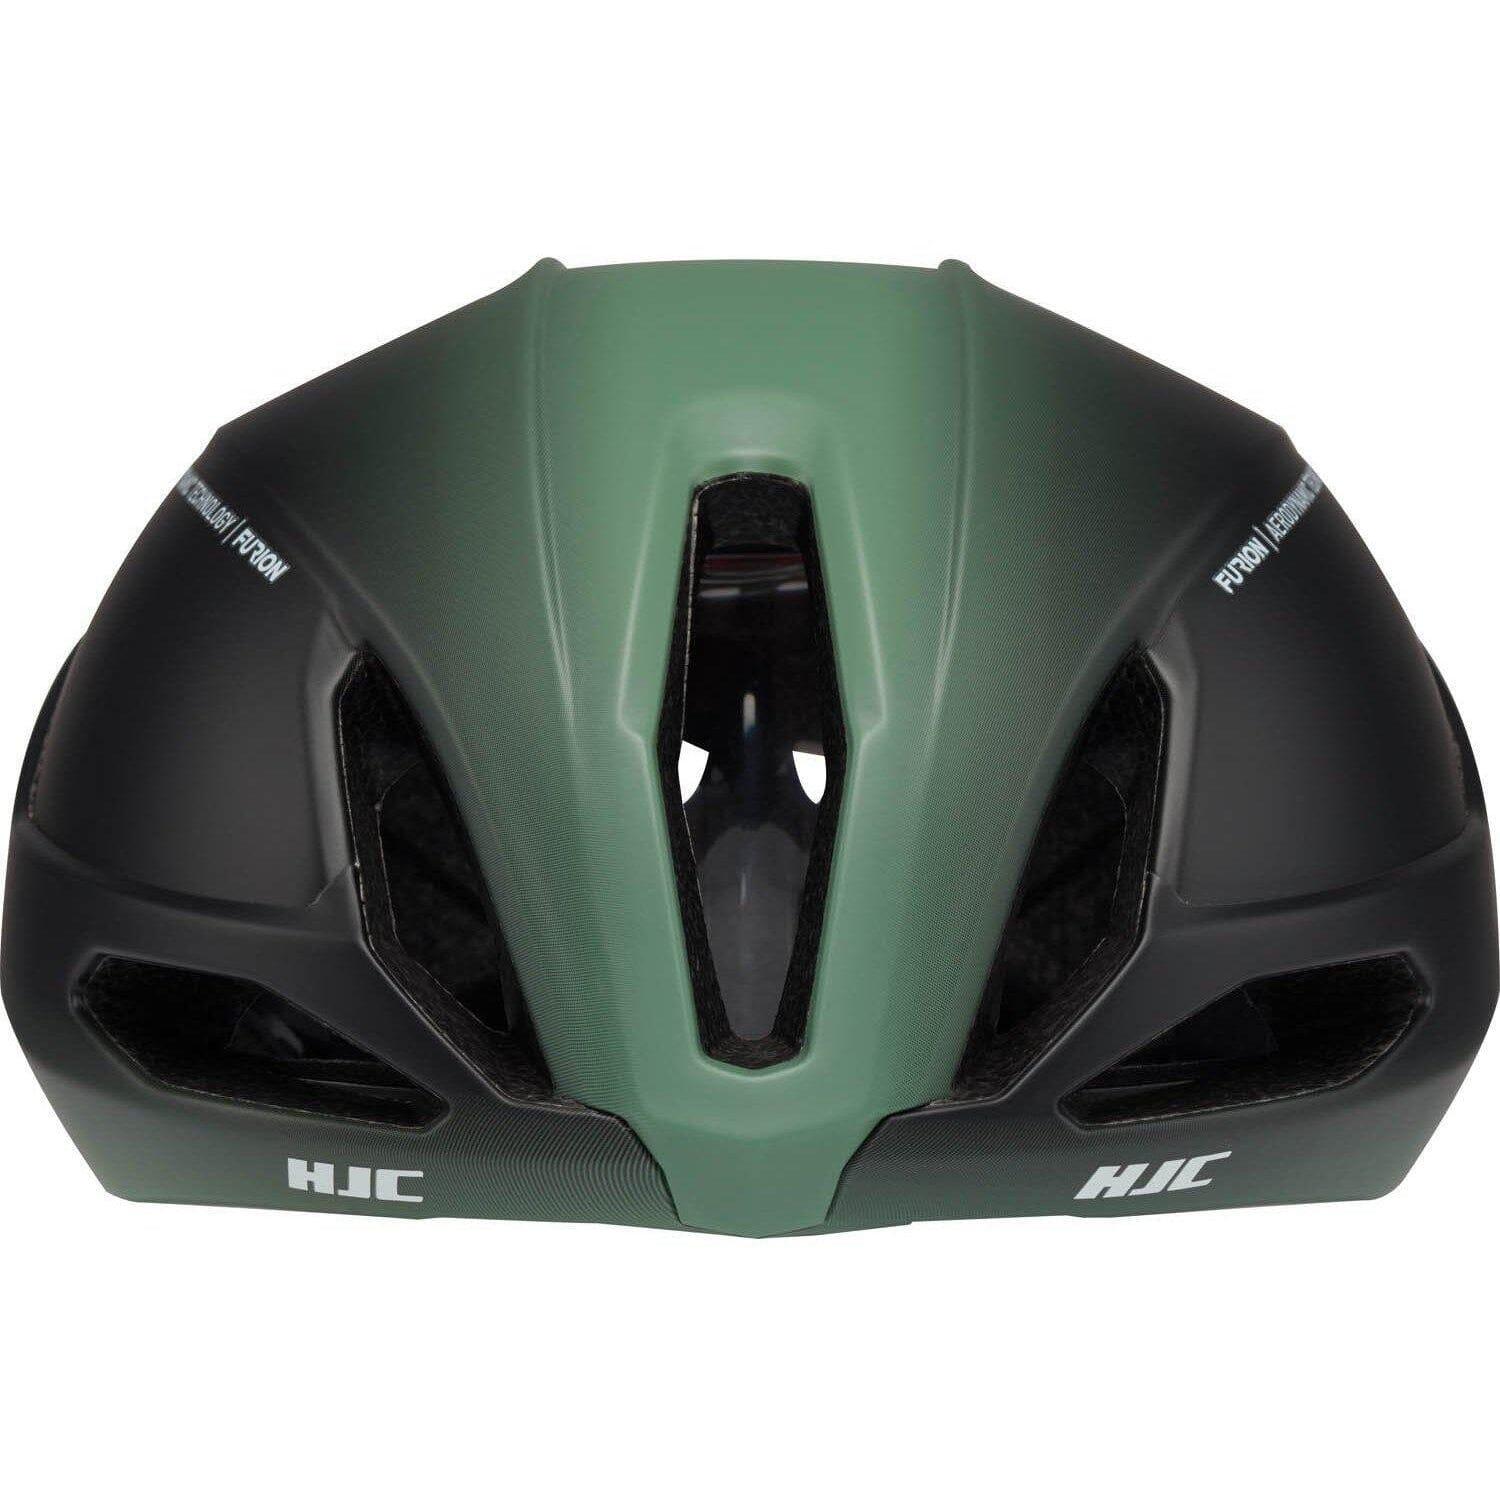 HJC Furion 2.0: Light, Aero, High-Performance Cycling Helmet 2/6